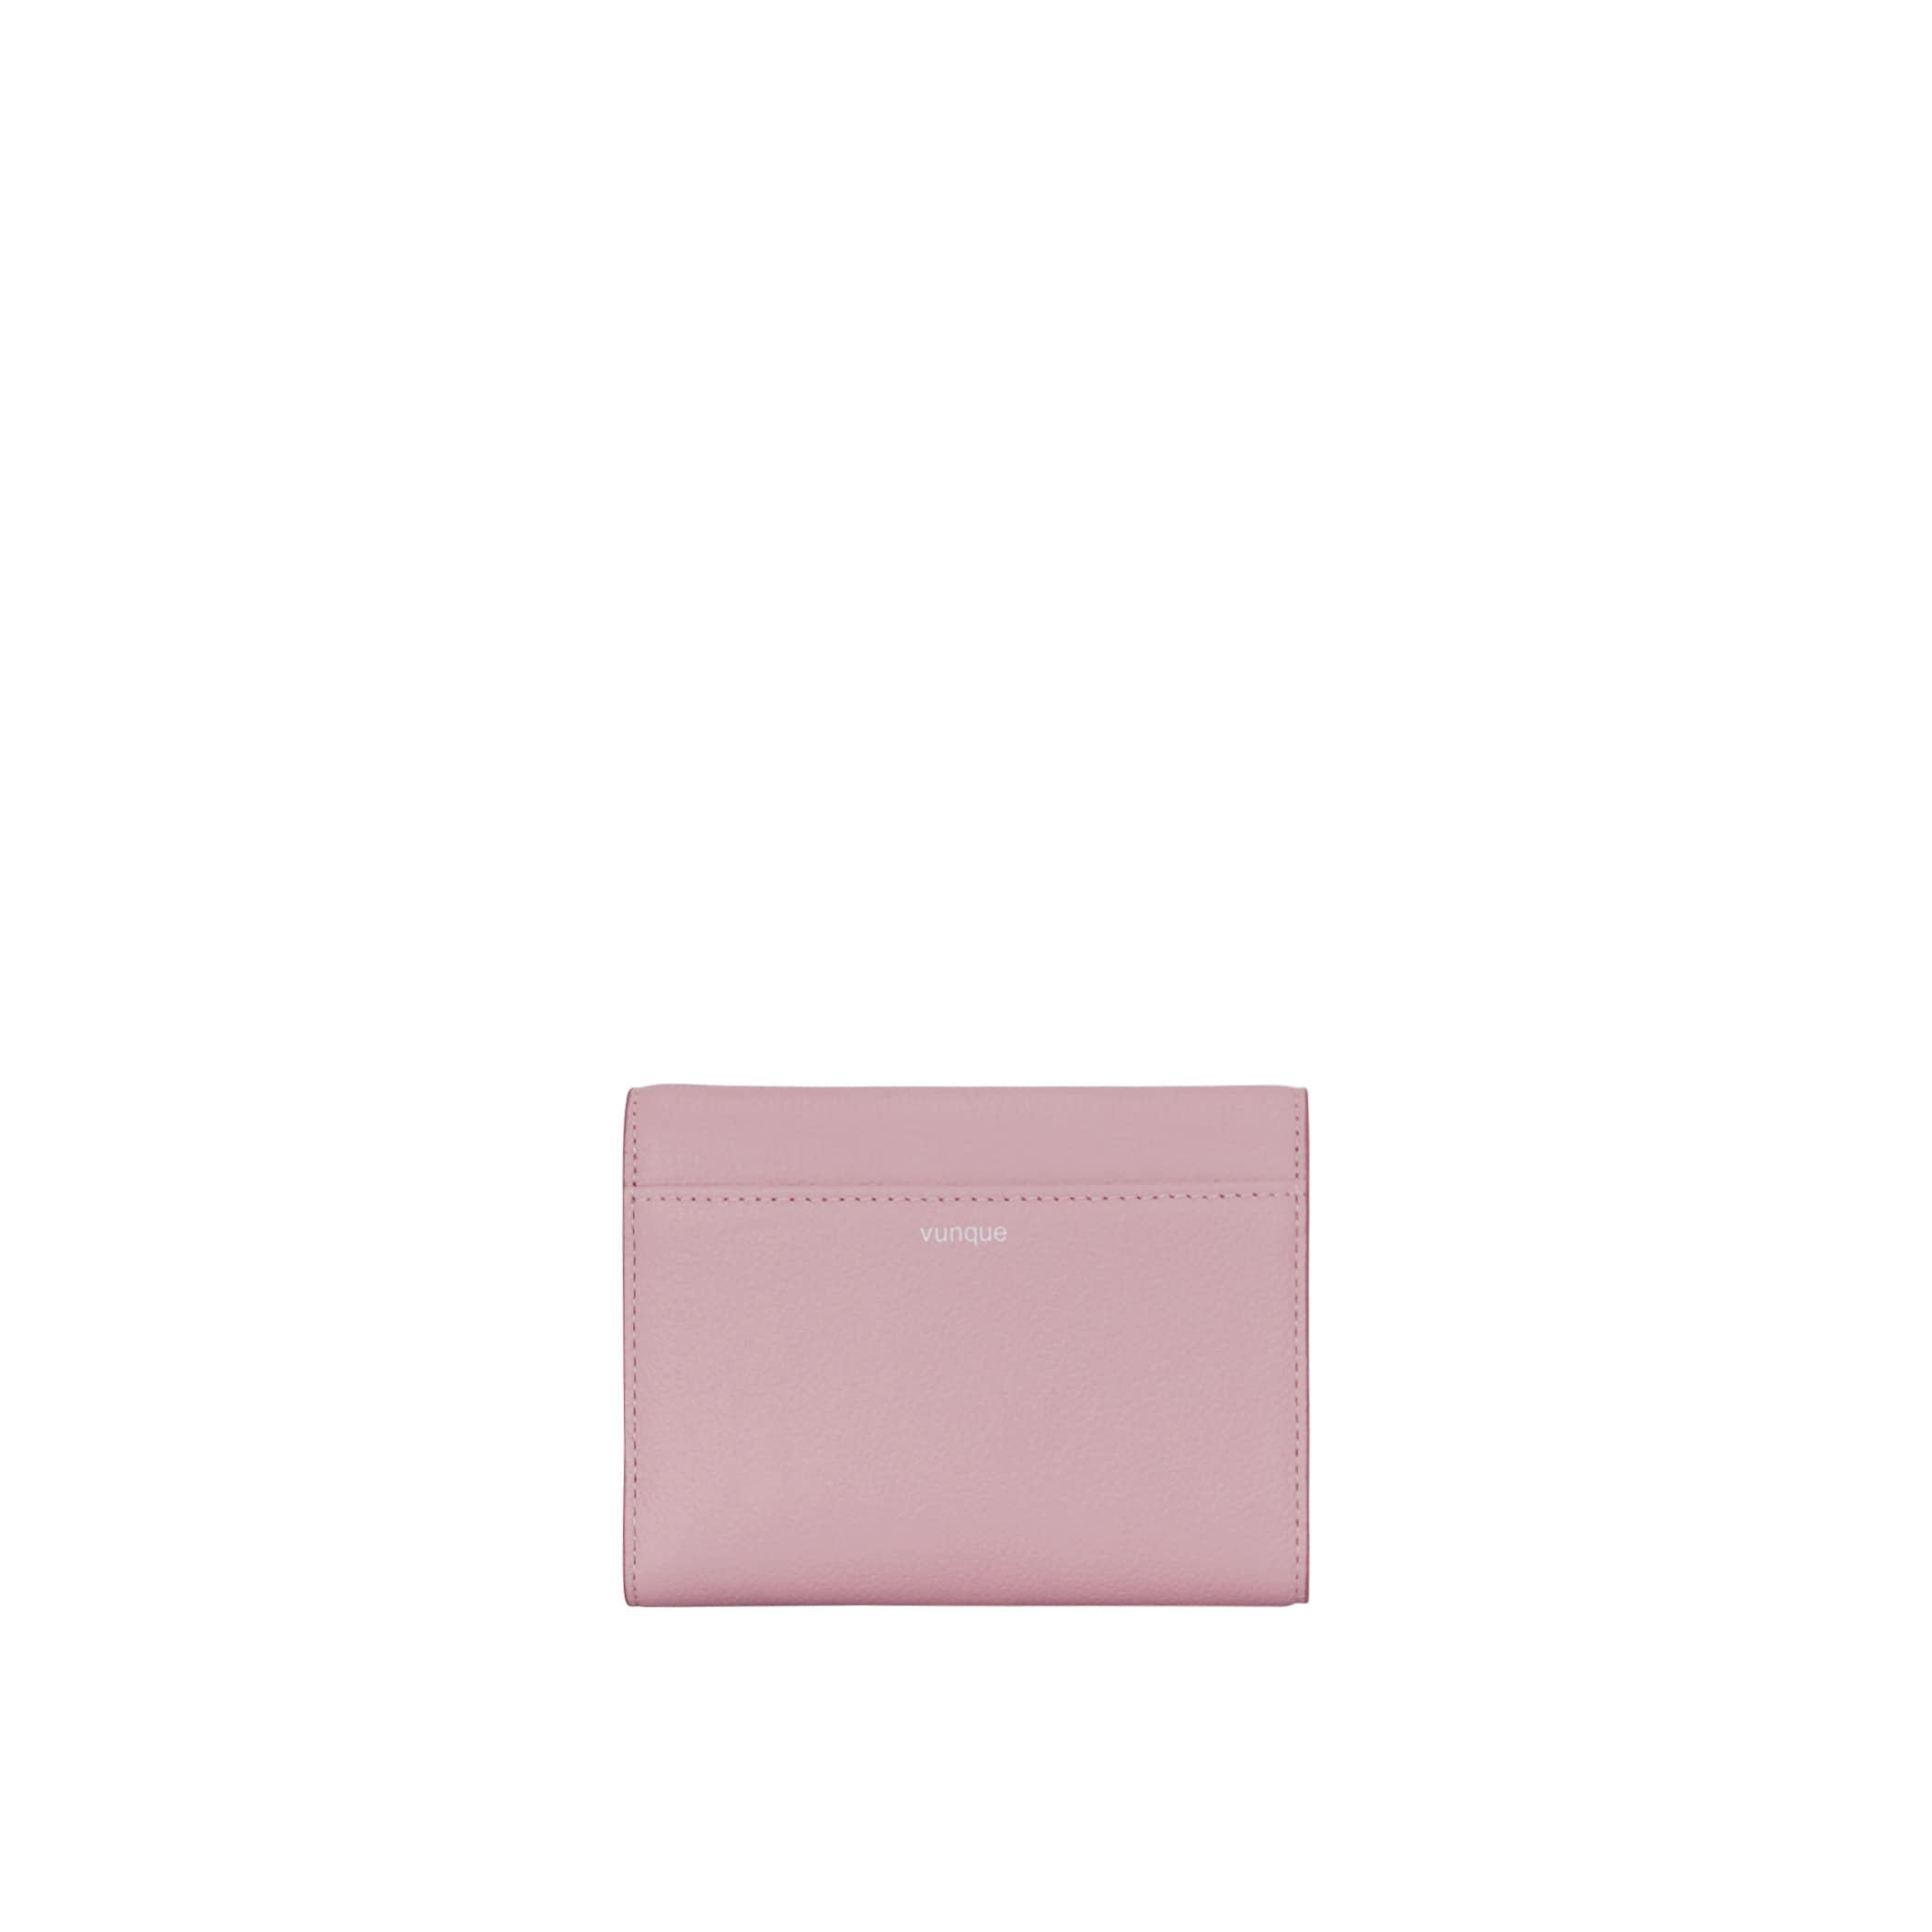 Occam Driot Medium Wallet (오캄 디롯트 중지갑) Bebe Pink